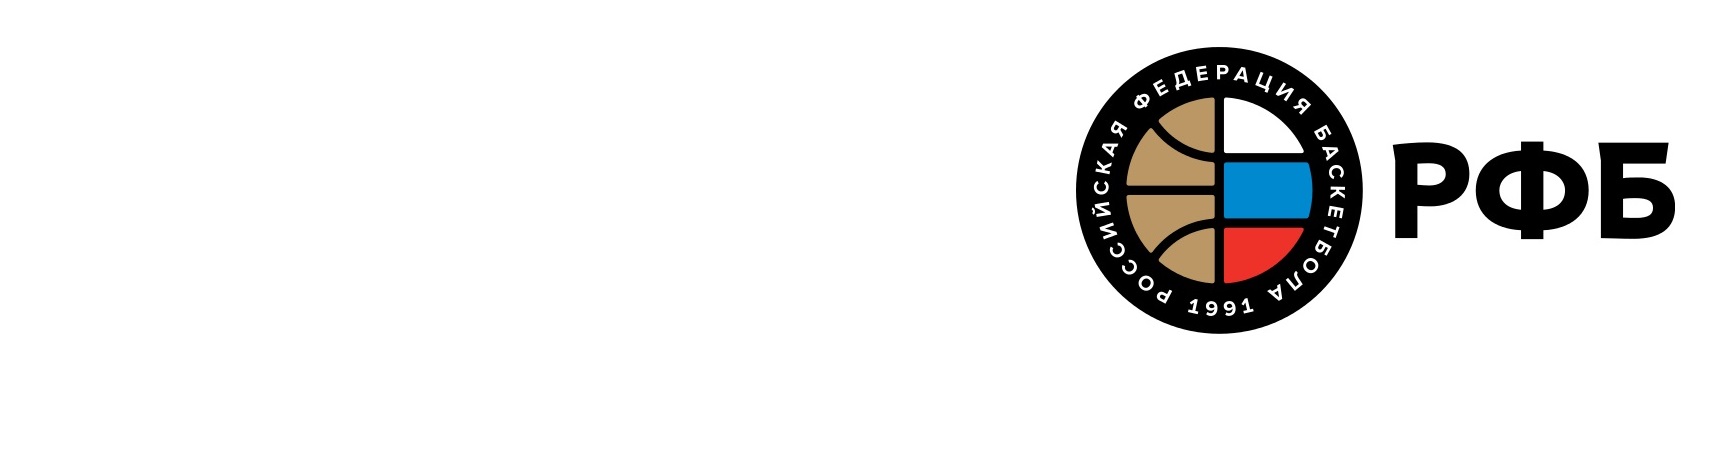 Сайт российской федерации баскетбола. Эмблема Федерации баскетбола России. РФБ баскетбол логотип. Российская Федерация баскетбола лого. РФБ логотип без фона.